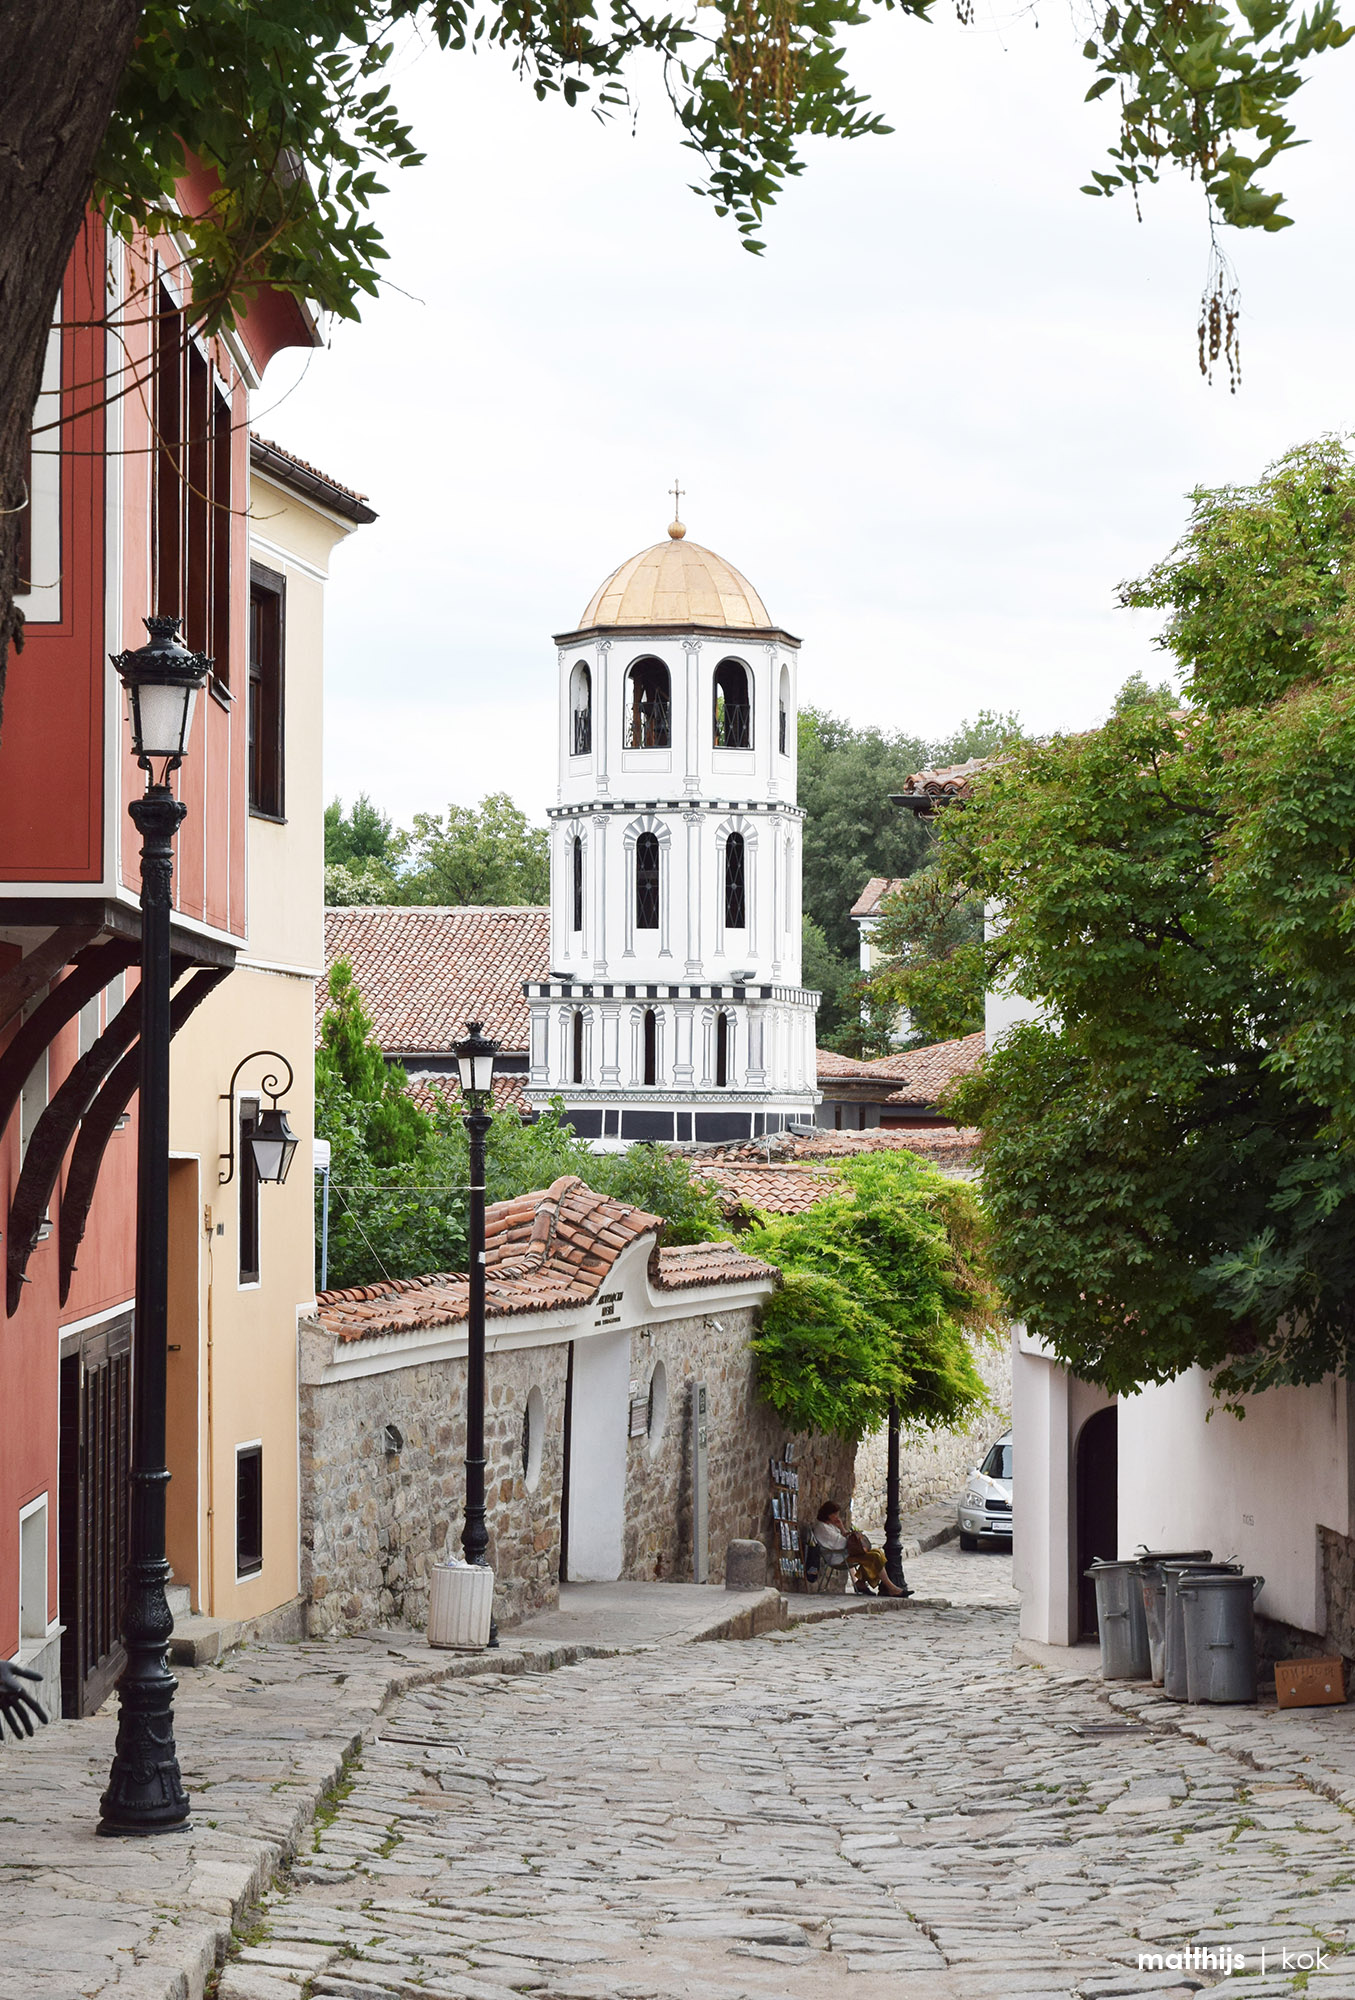 St Constantine and Helena church, Plovdiv, Bulgaria | Photo by Matthijs Kok